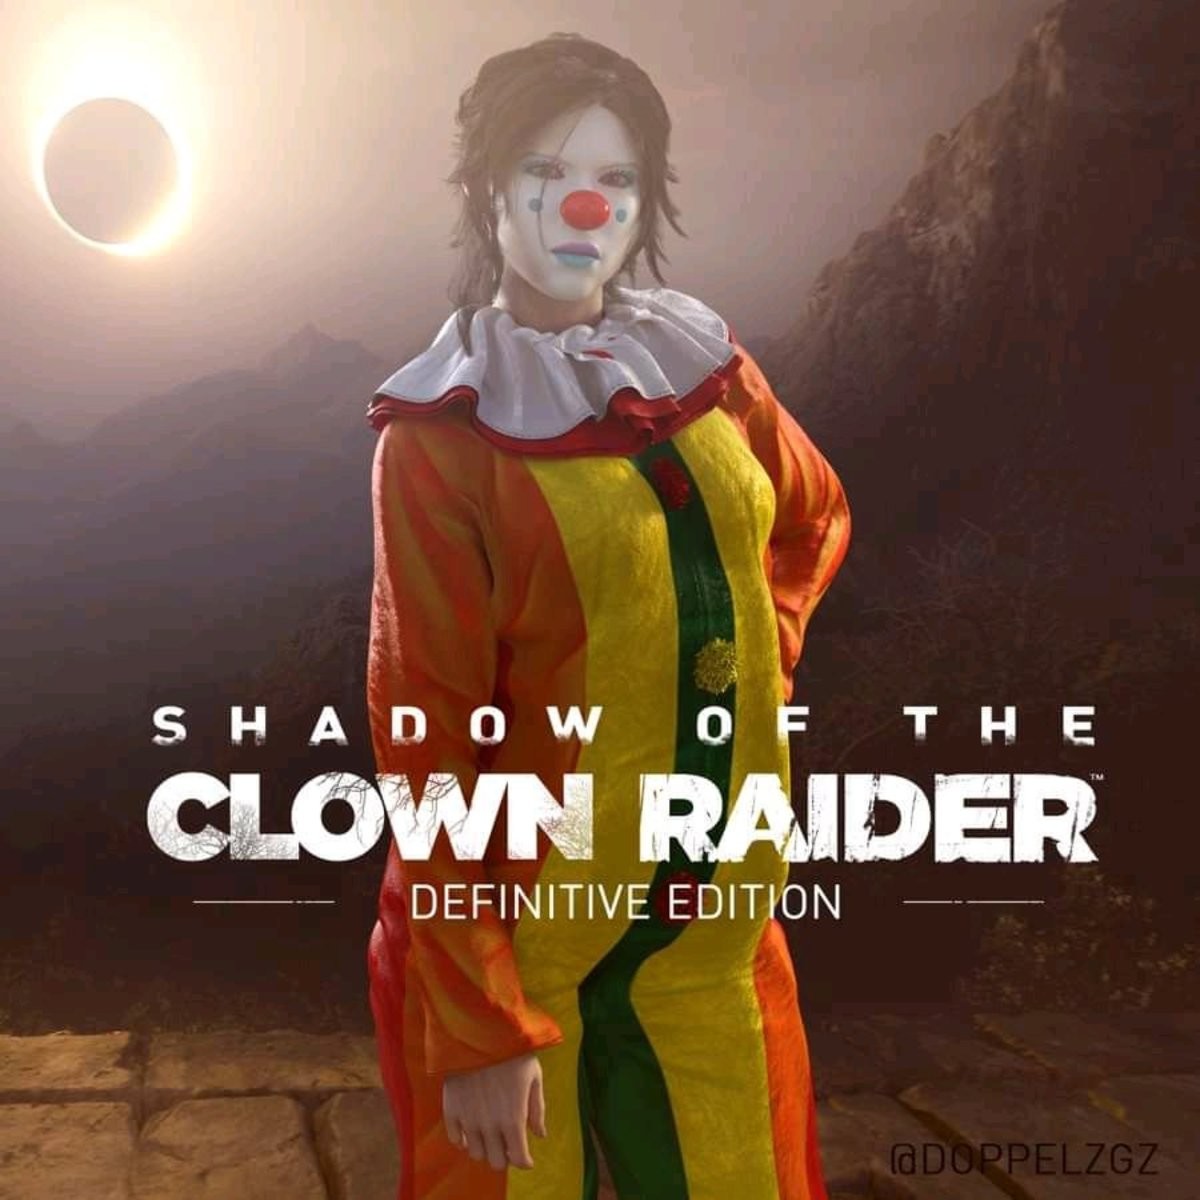 Kitzi the clown